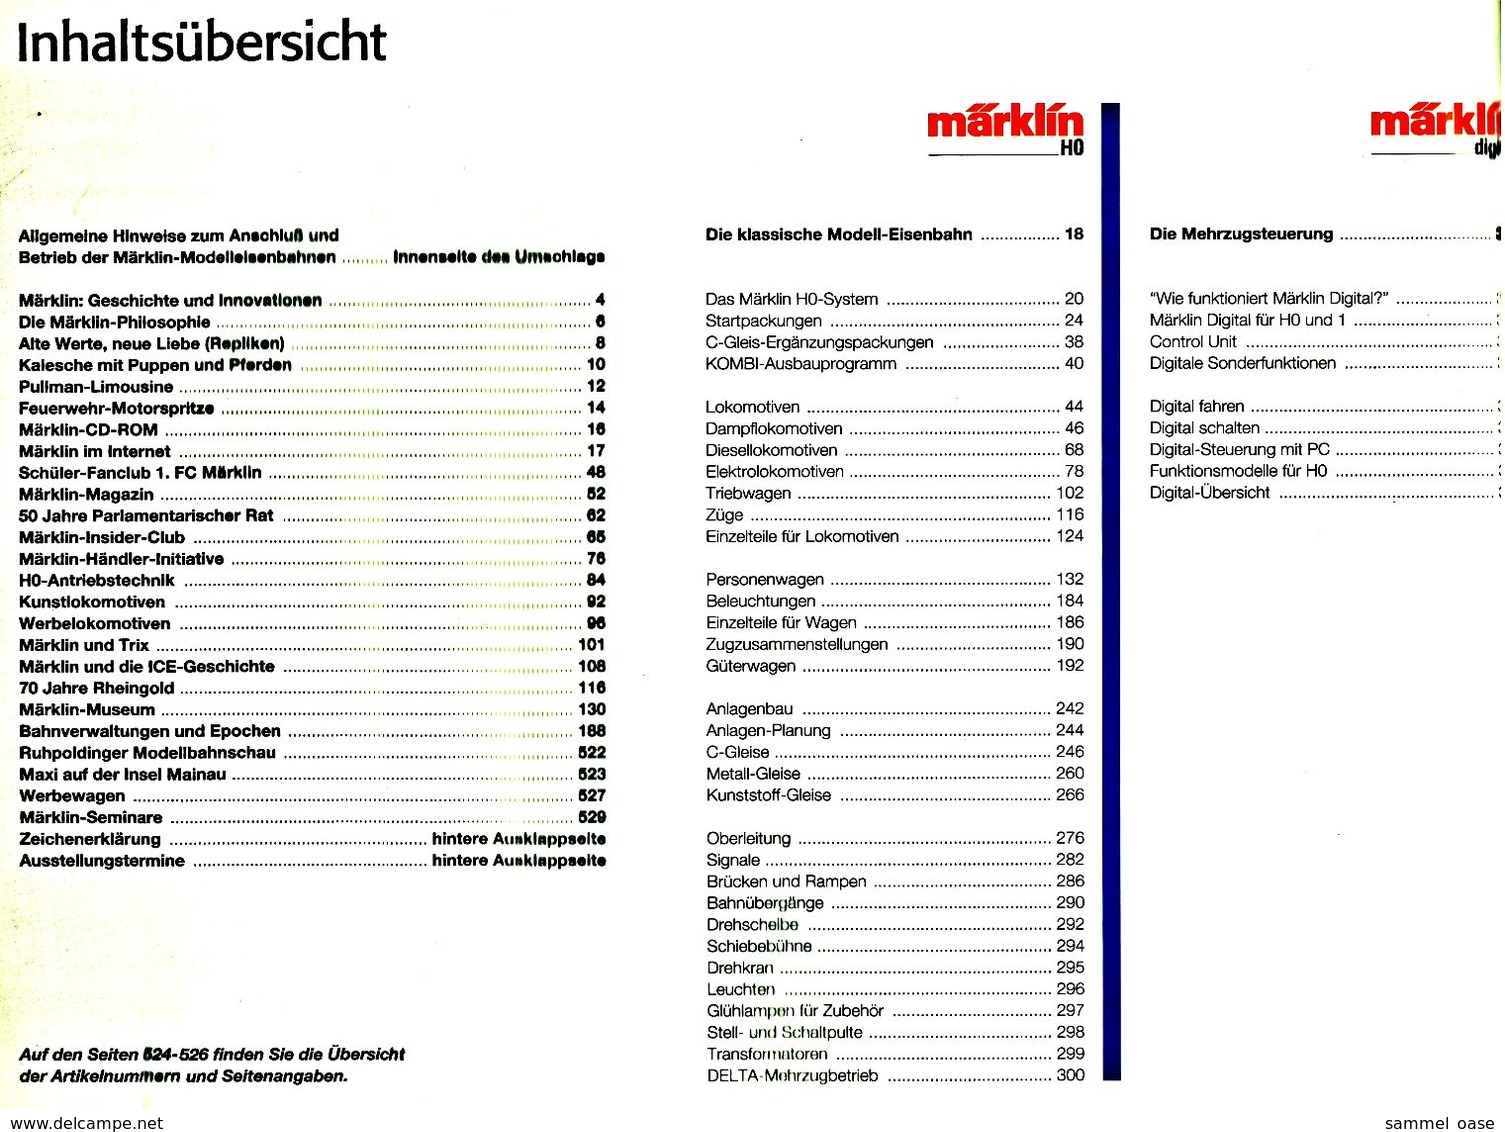 Märklin Katalog Gesammtprogramm 1998/99 DI  -  528 Seiten - Duits